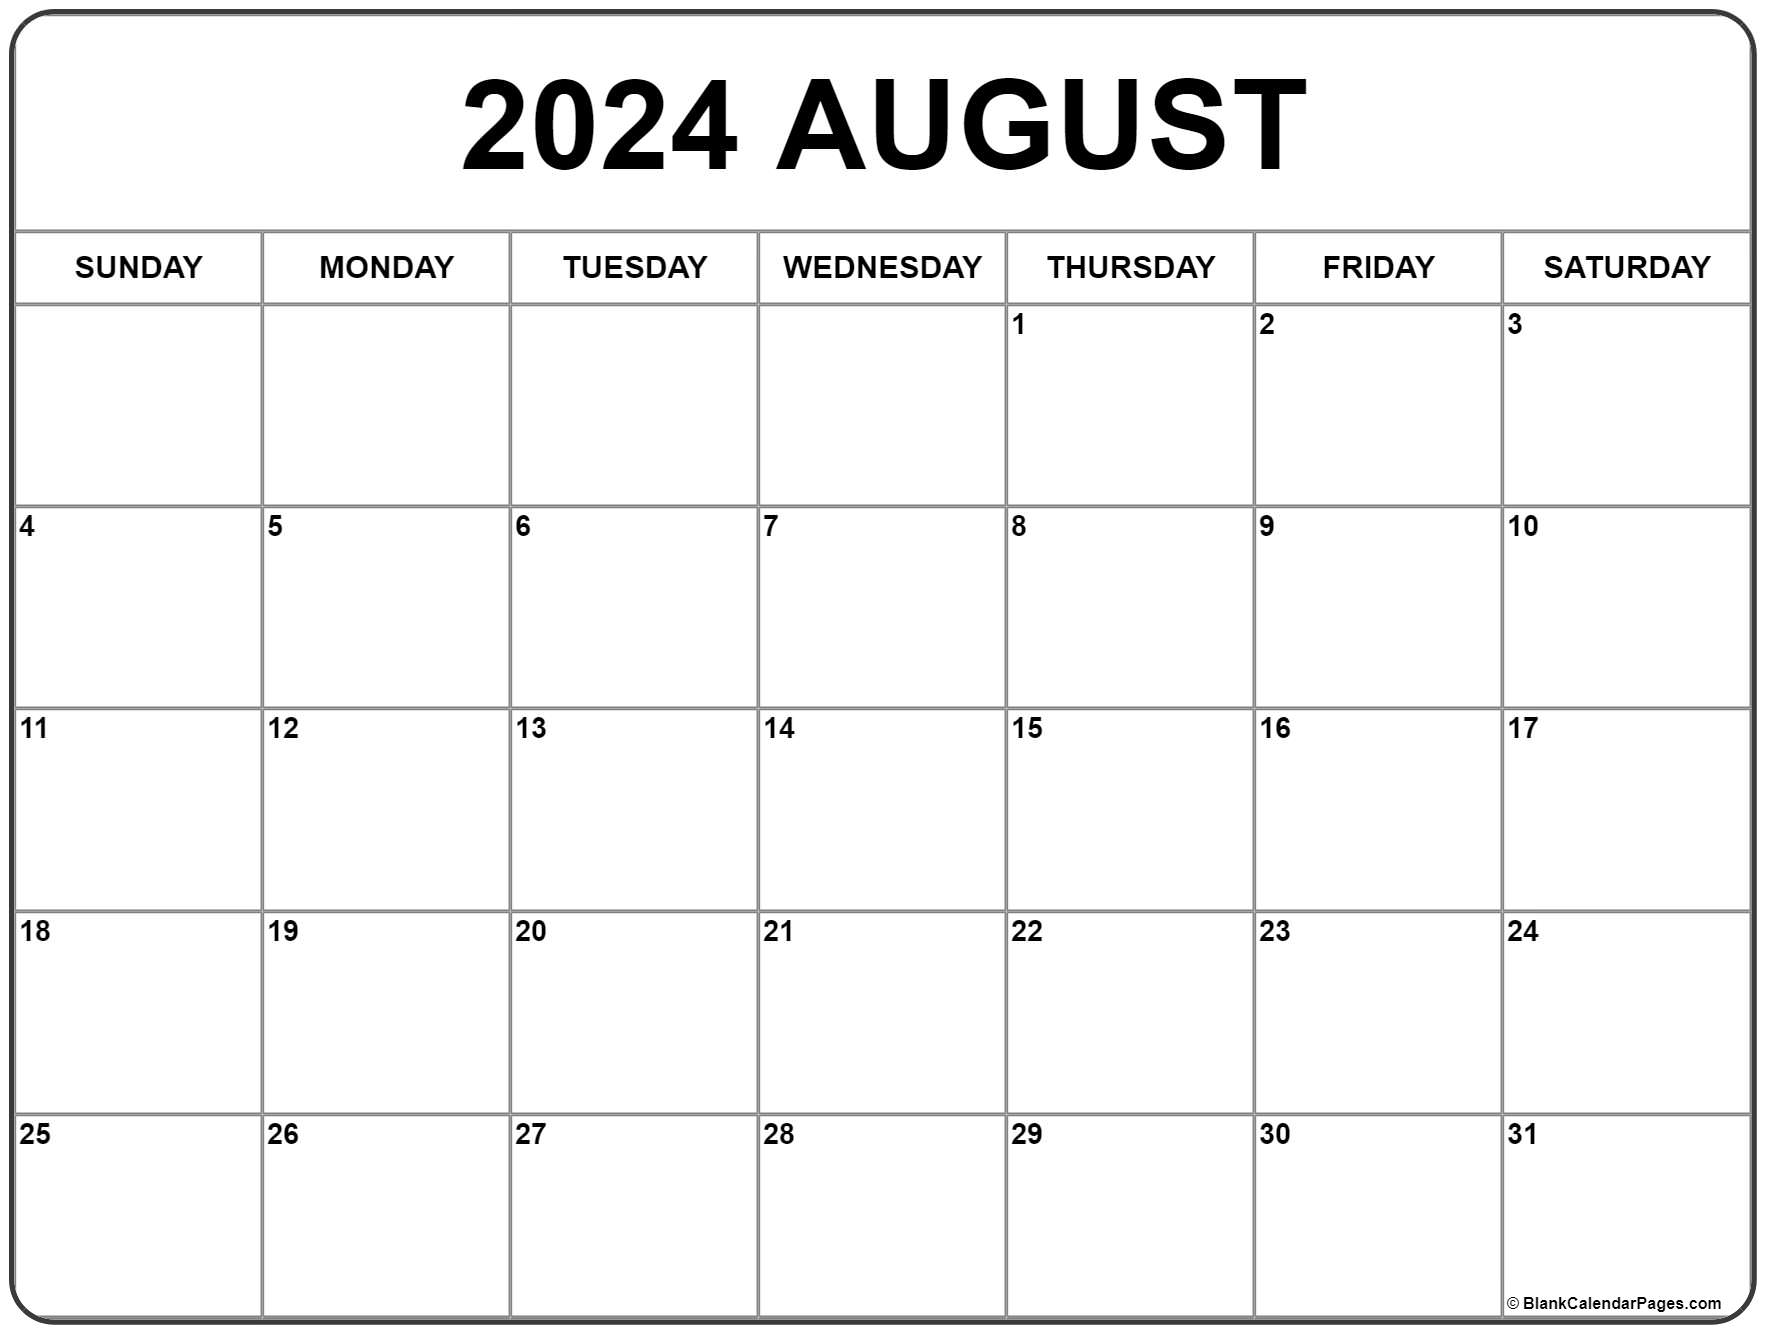 Printable Calendar August 2021 August 2021 calendar | free printable monthly calendars